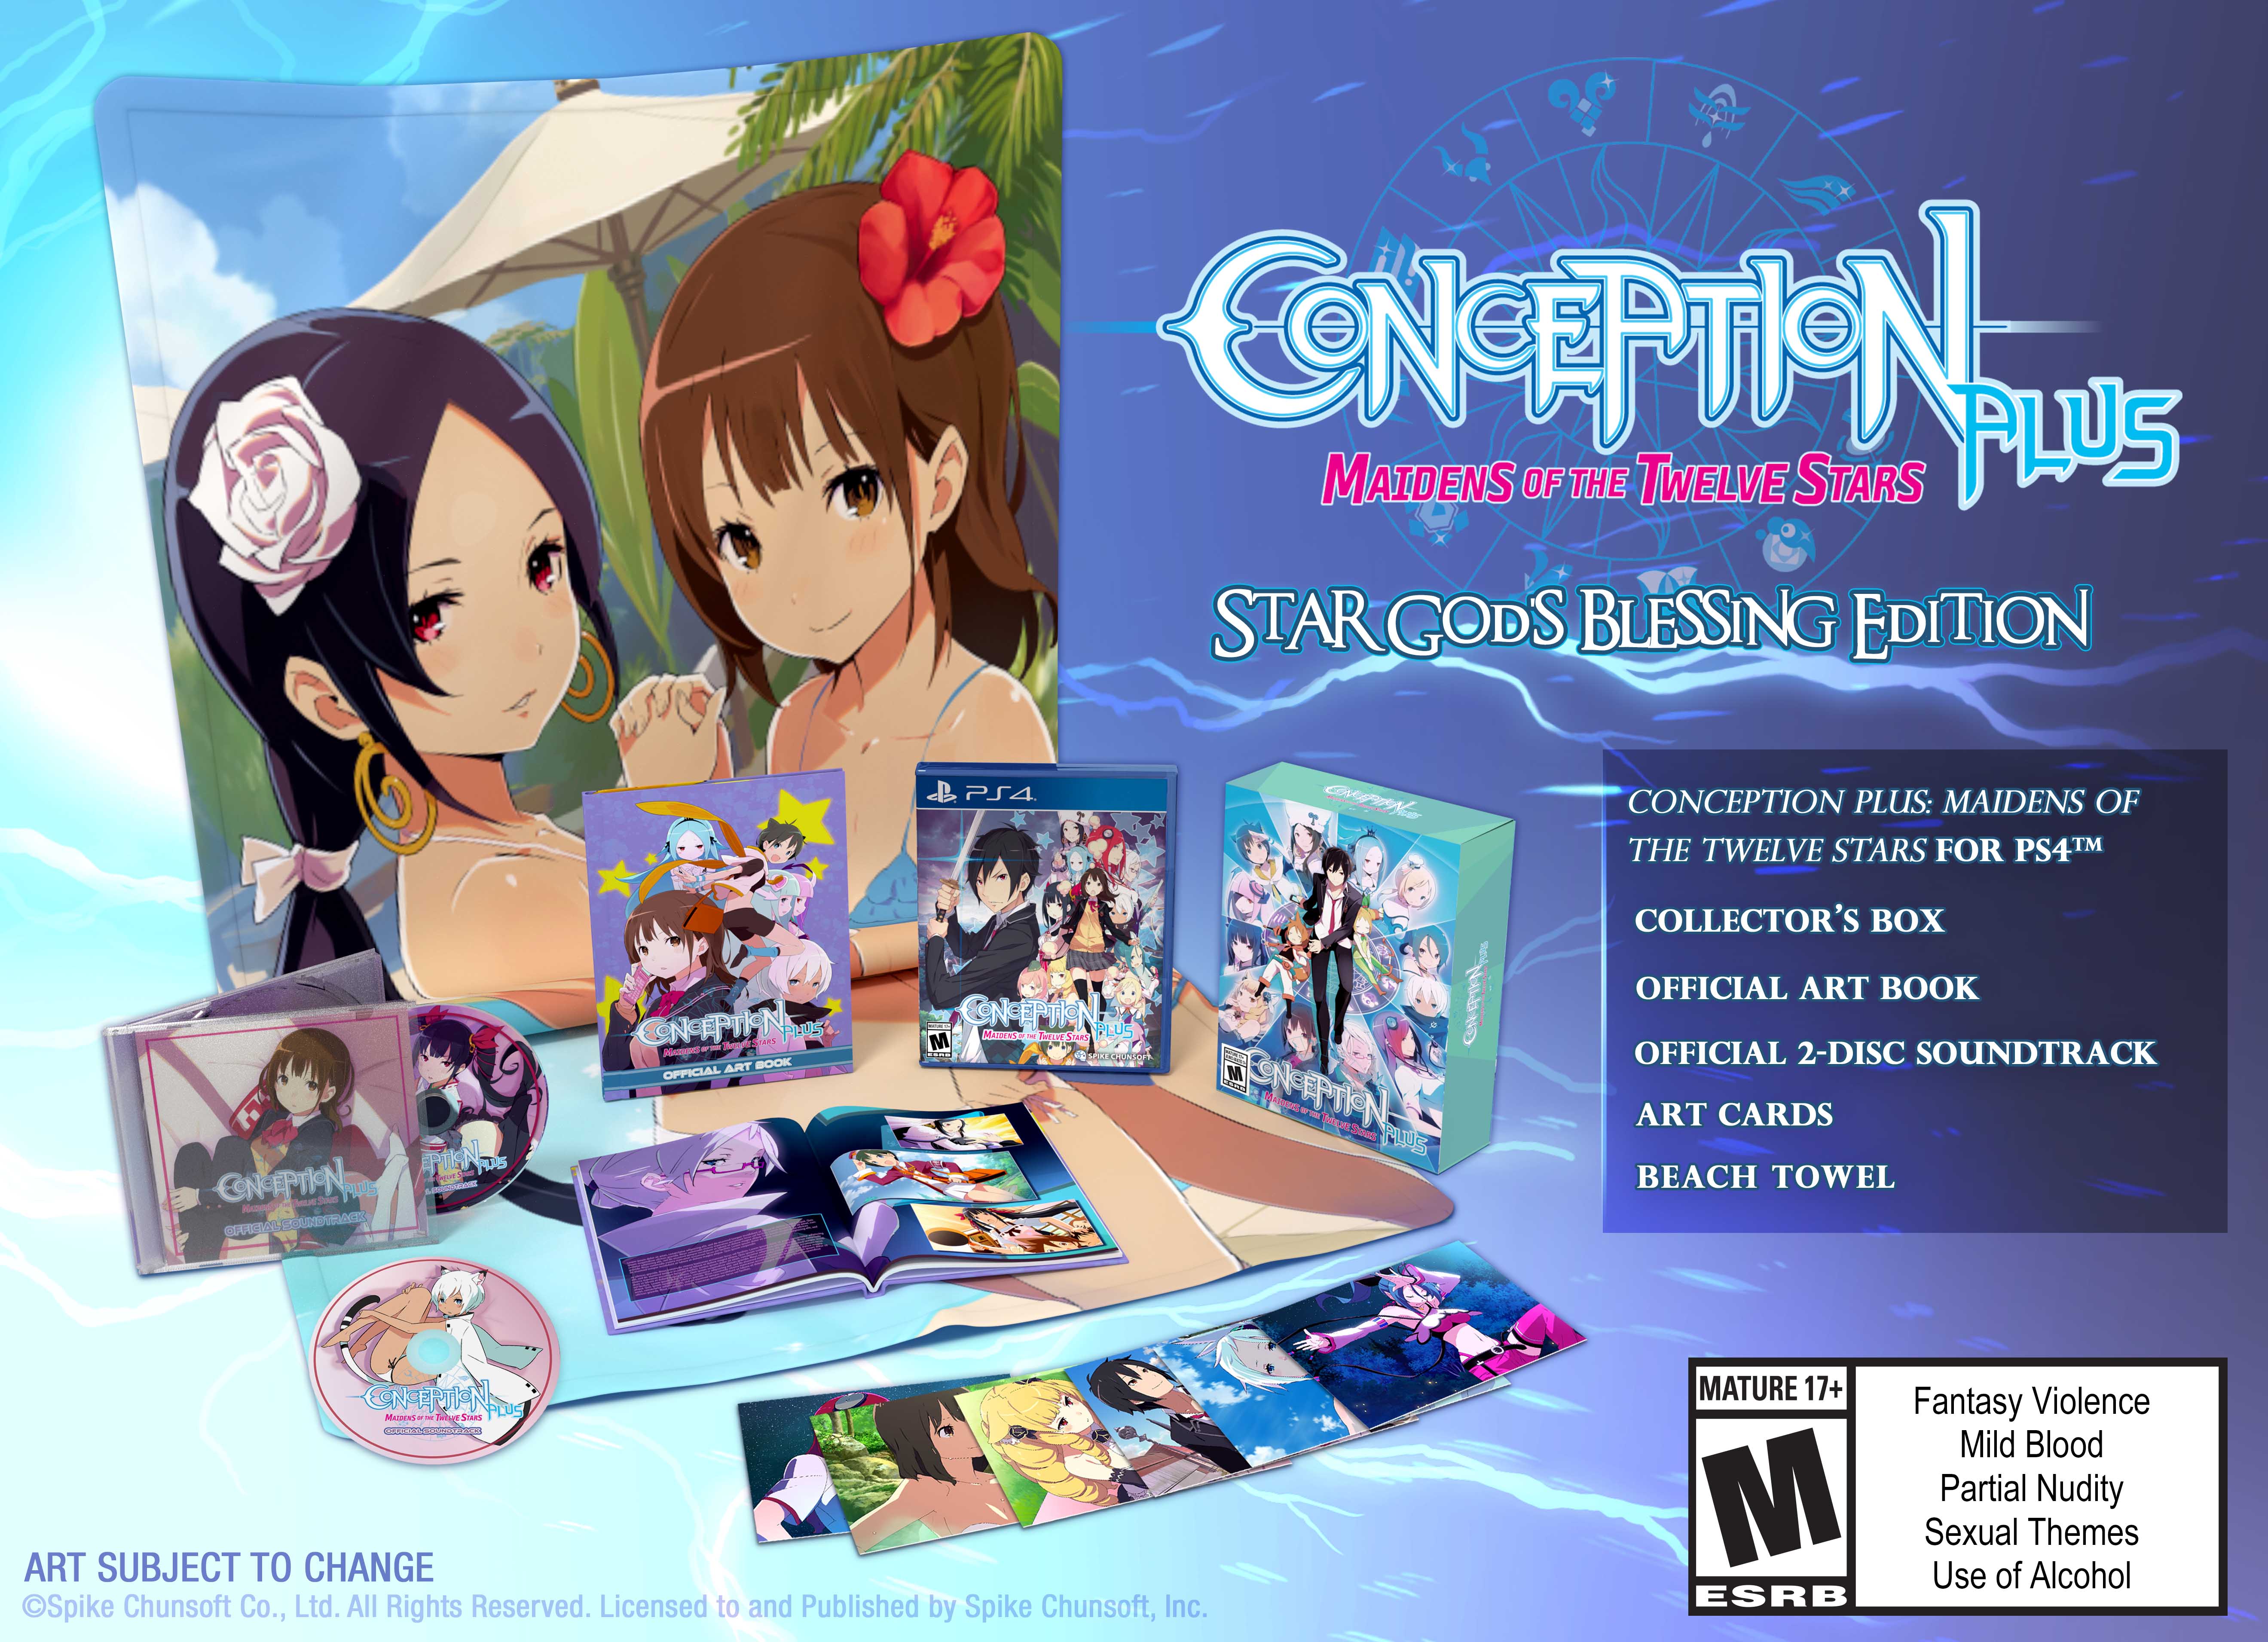 Conception Plus: Maidens of the Twelve Stars (PC/PS4): confira a abertura  do jogo - GameBlast